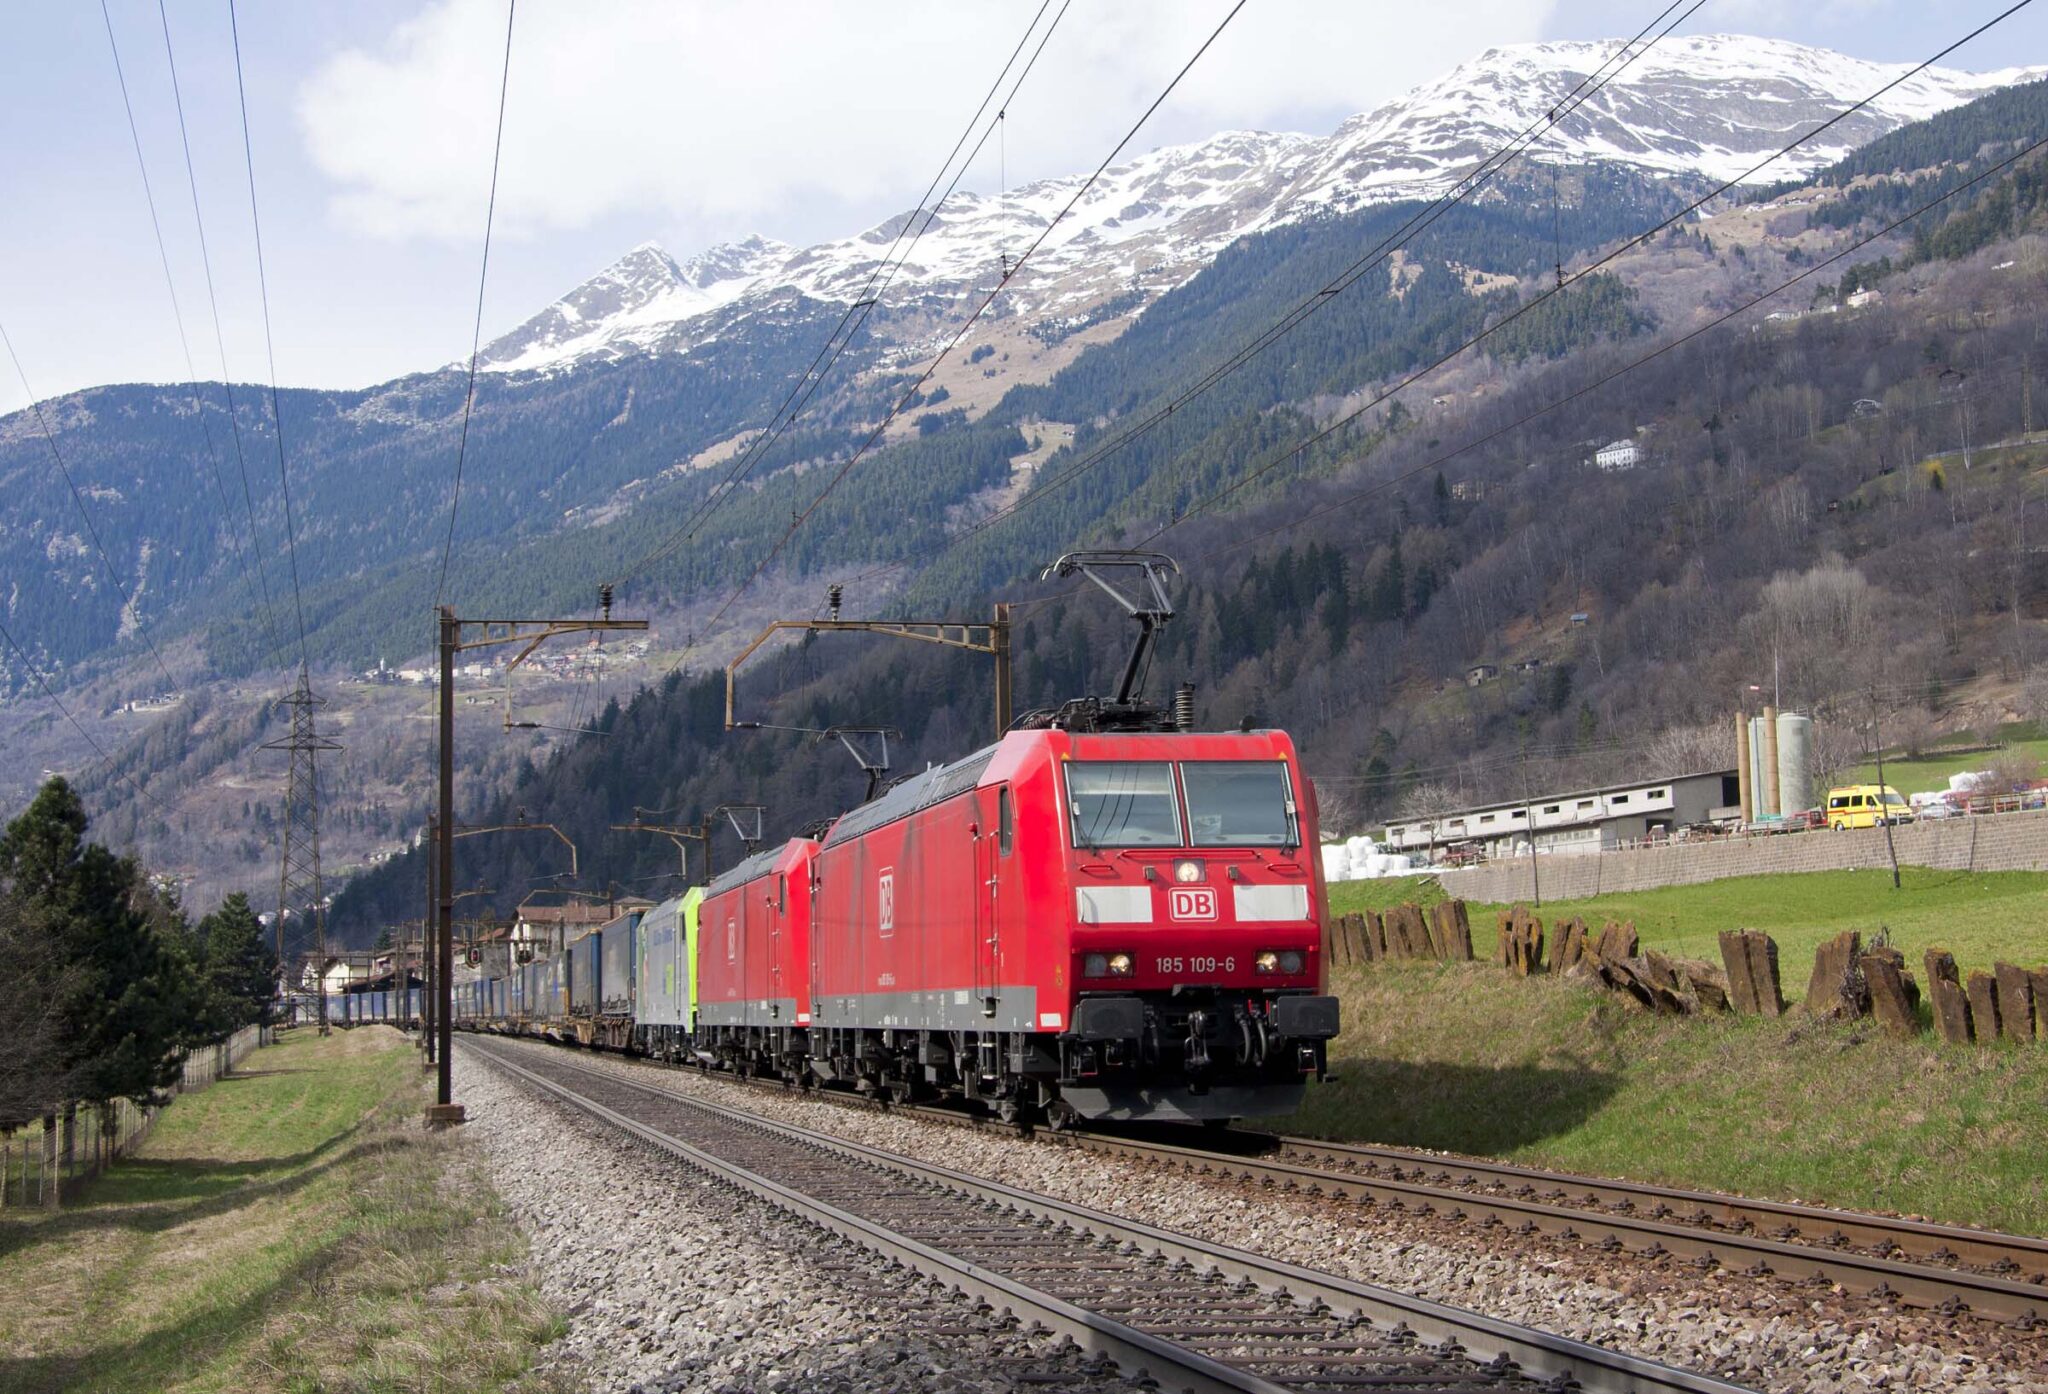 Class 185 electric locomotive in Switzerland